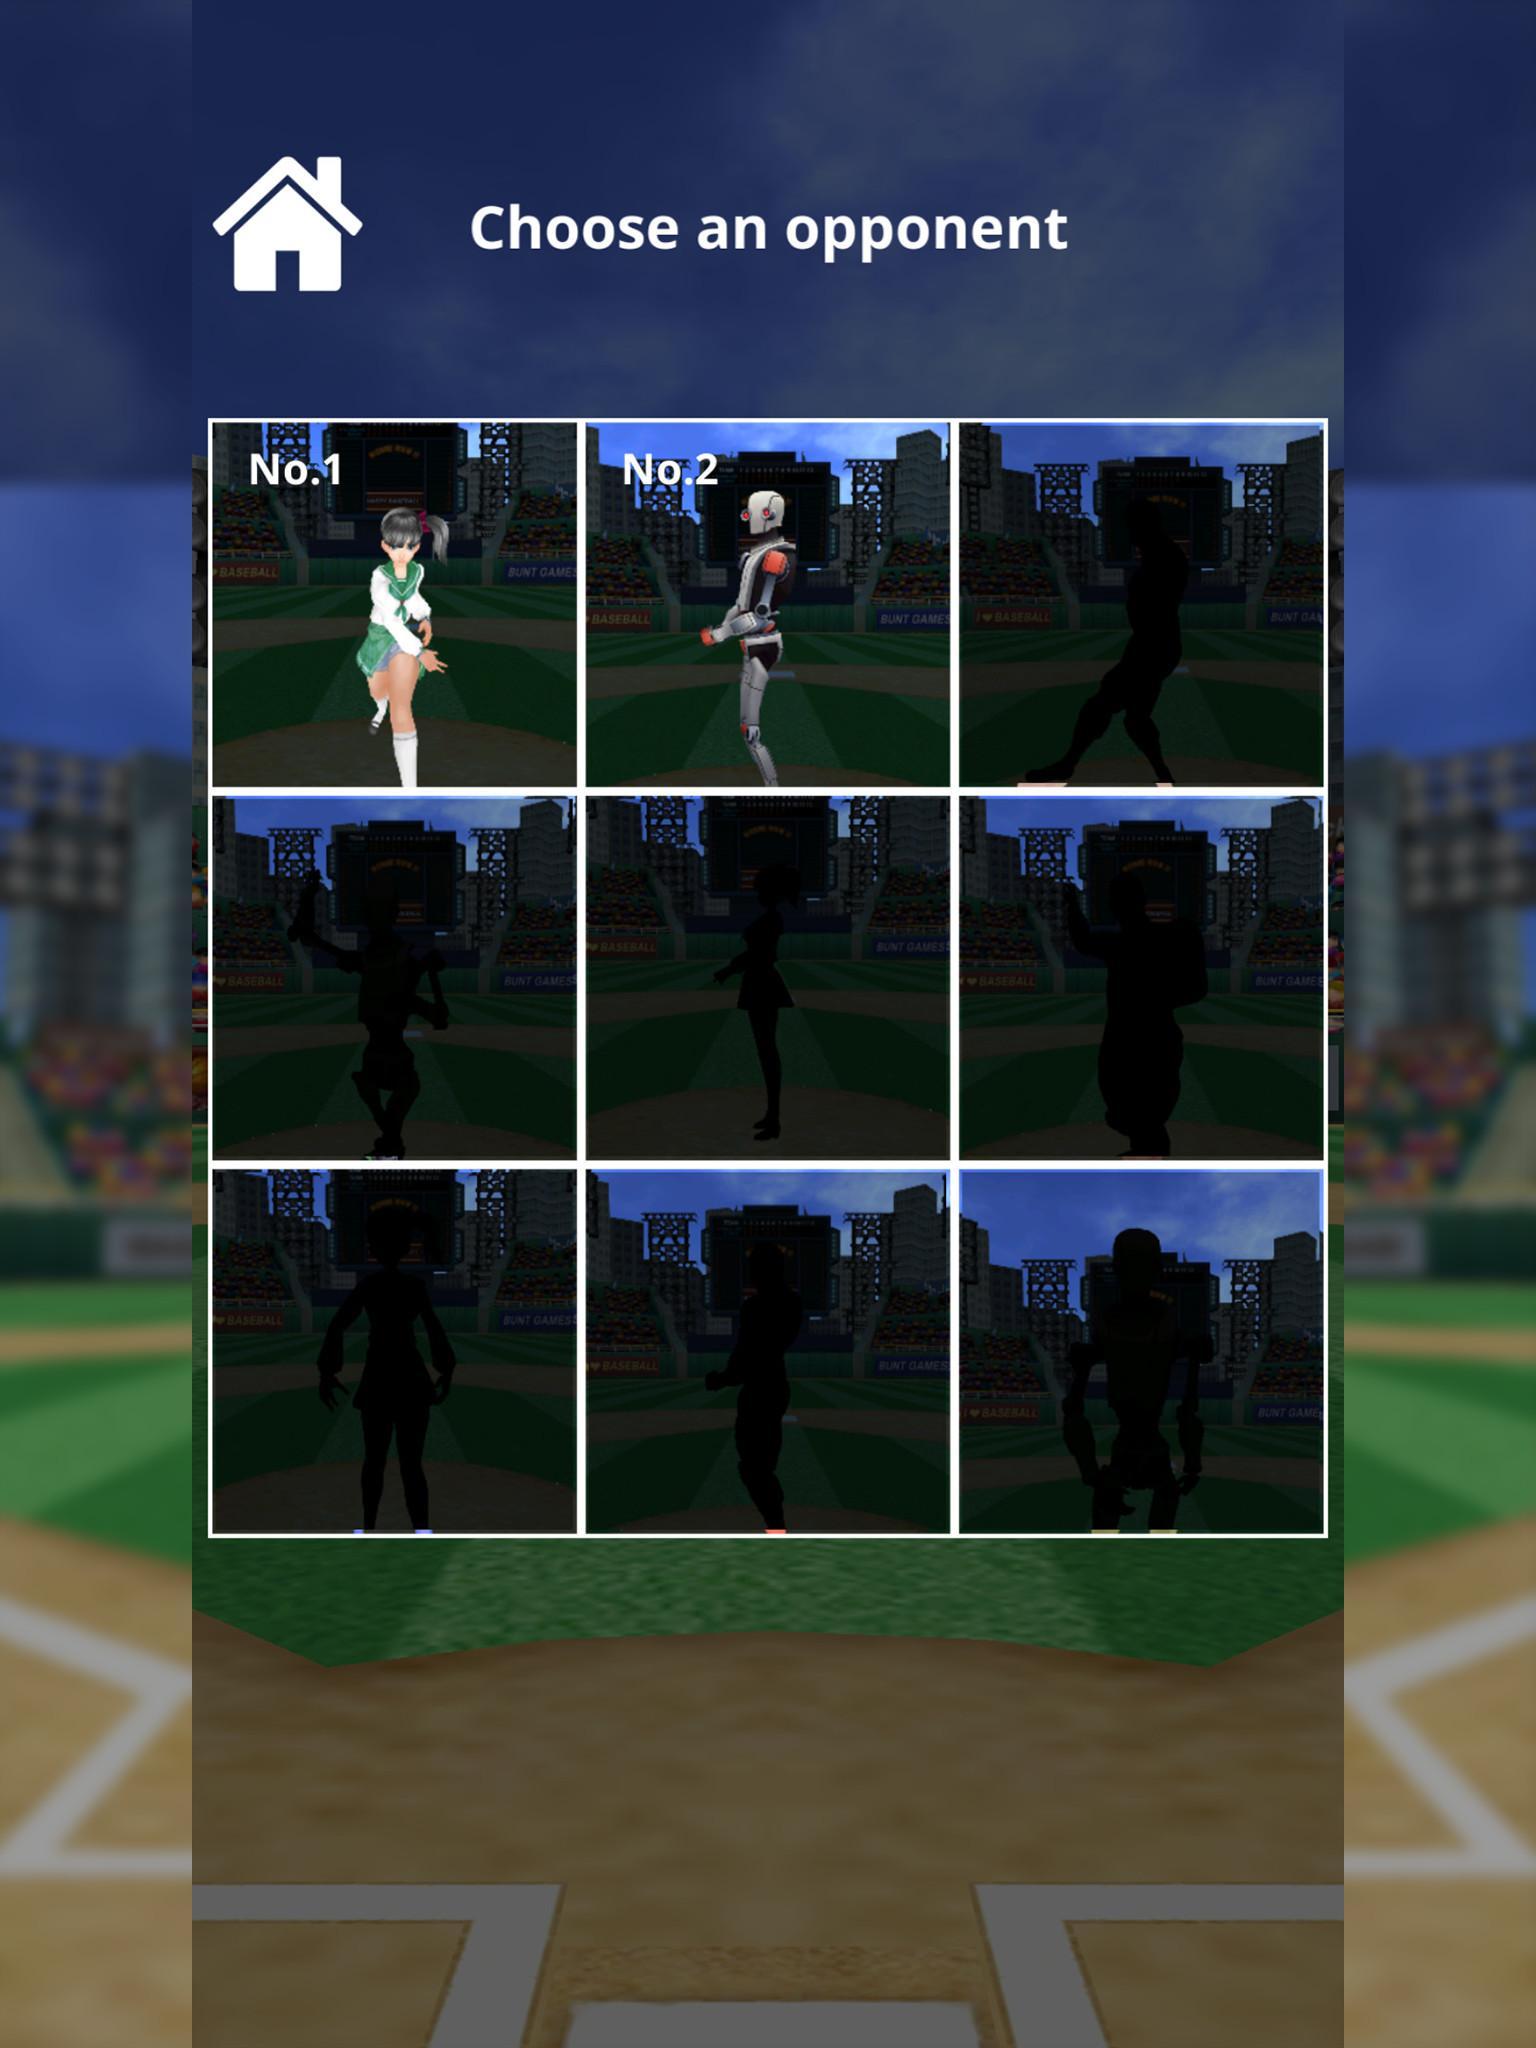 Run game bat. Run 10 баллов. Baseball games on Android 2013.